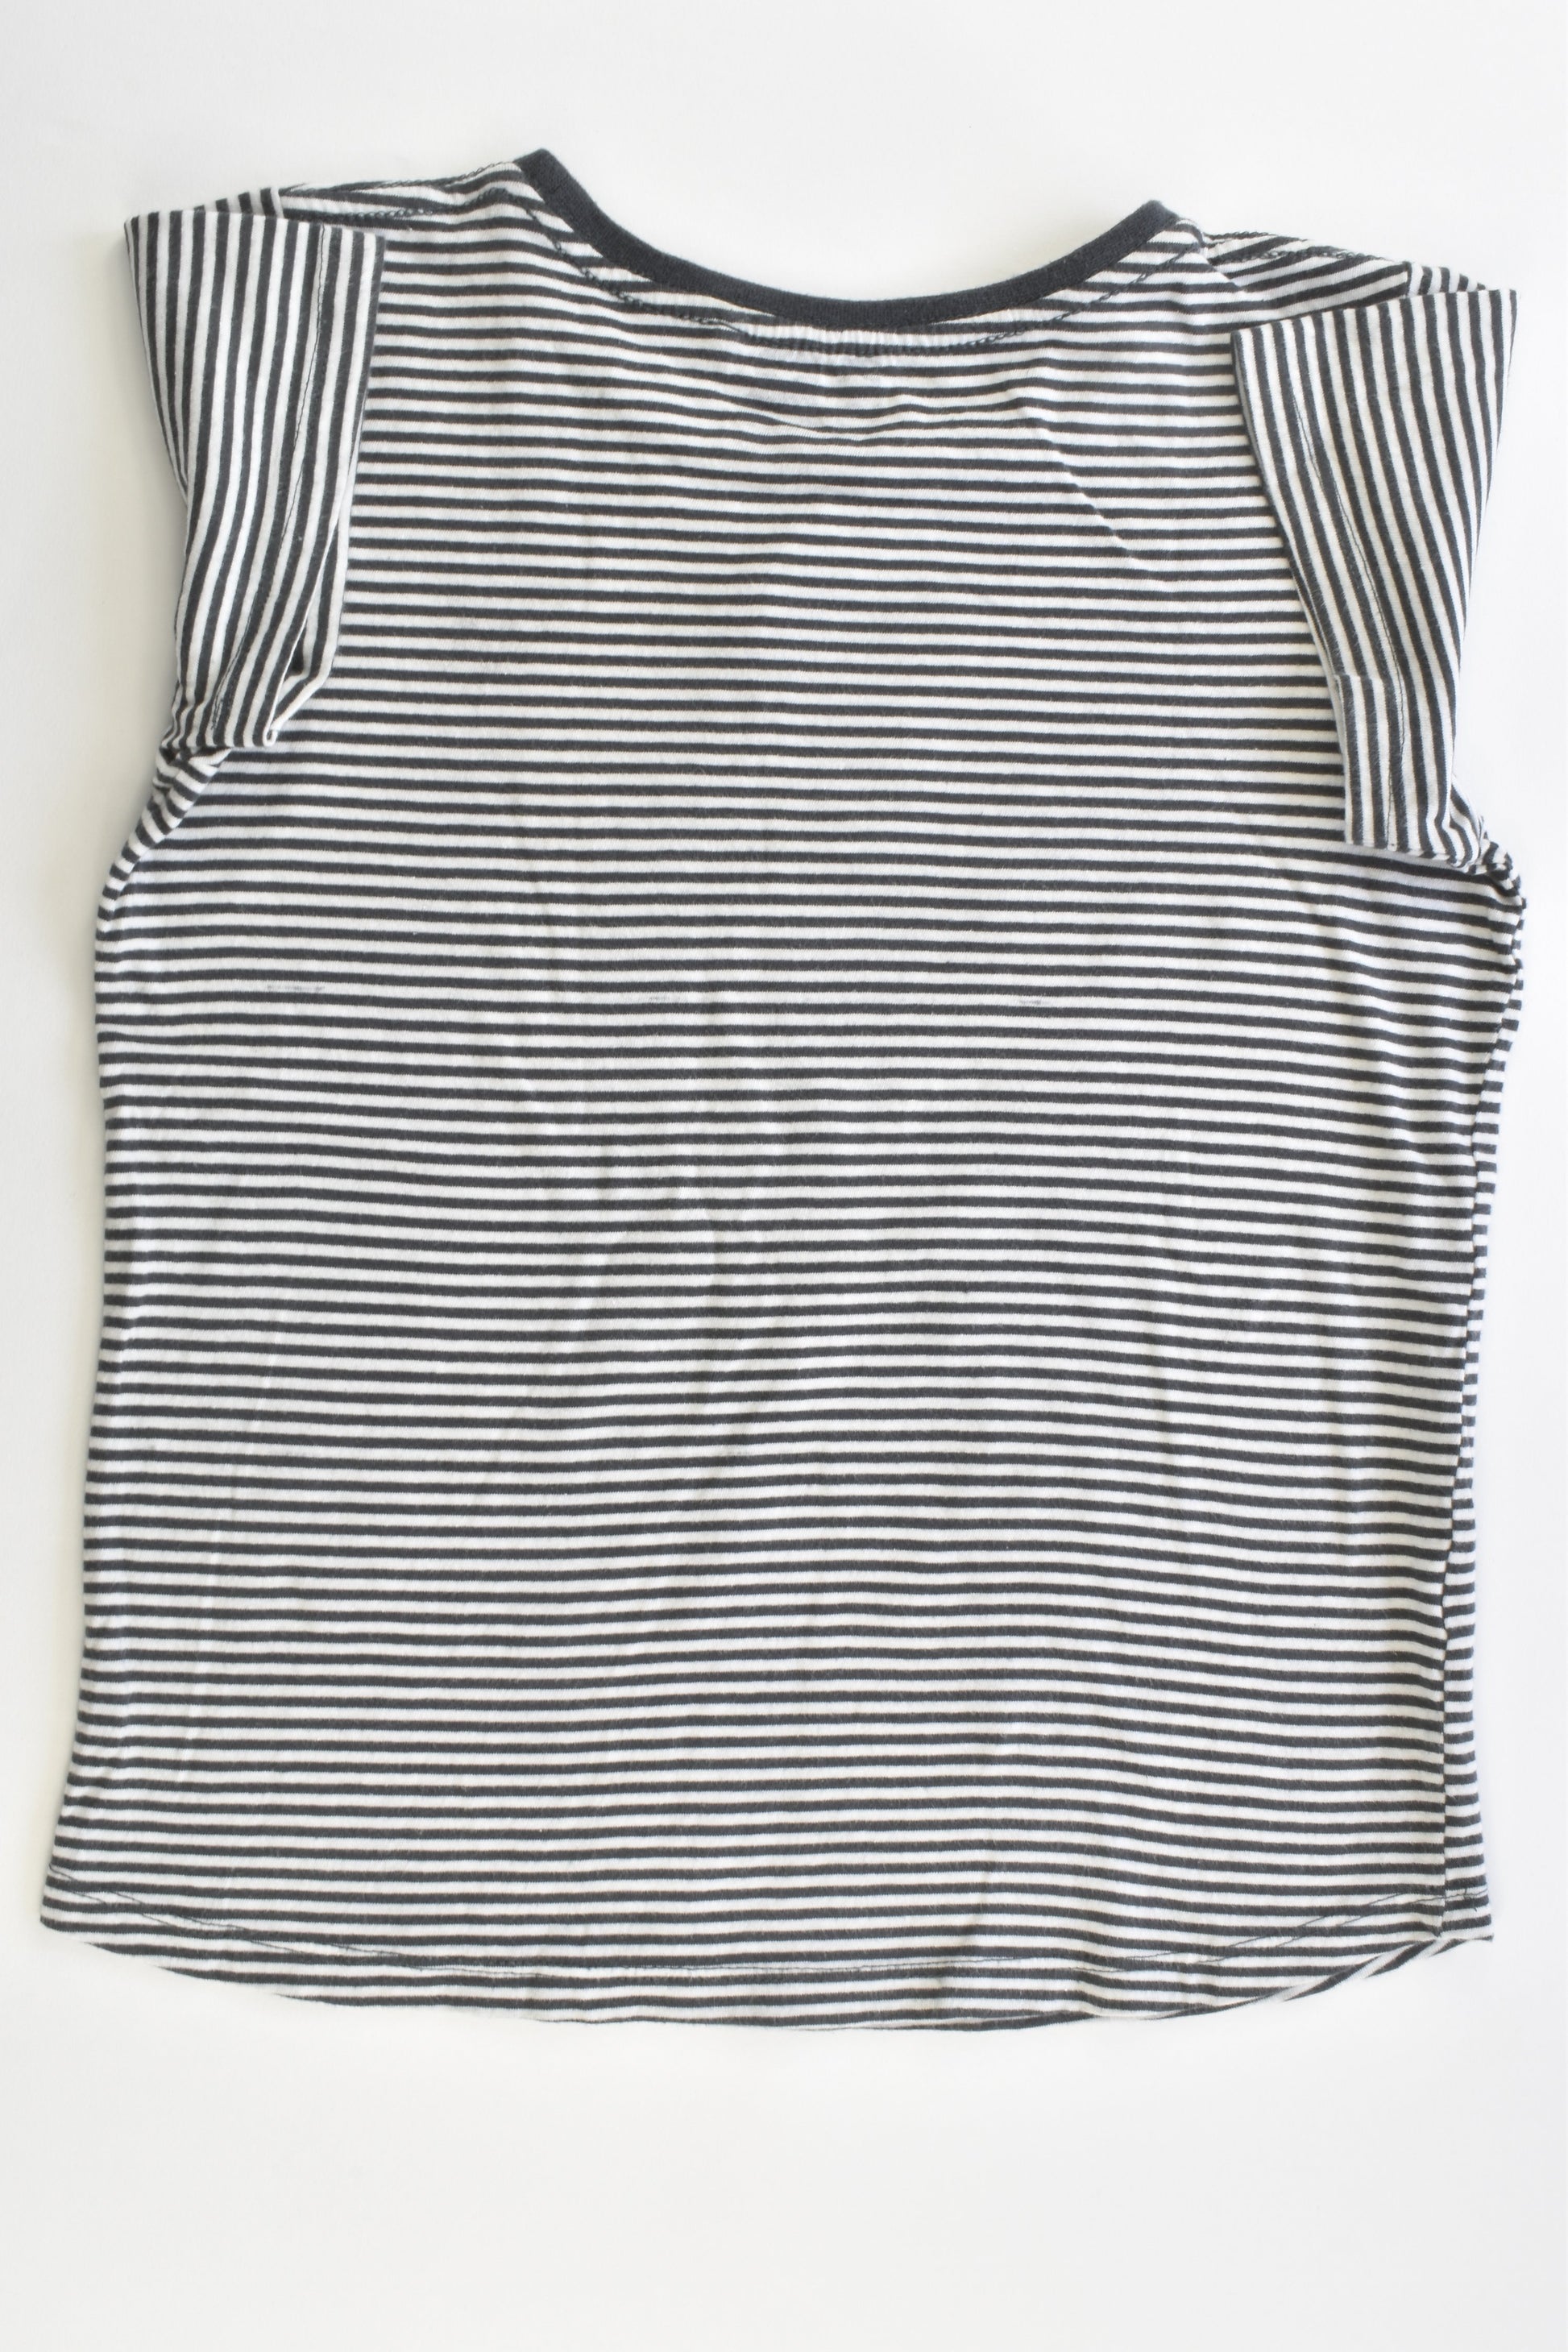 Cotton On Kids Size 8 Striped Skeleton T-shirt